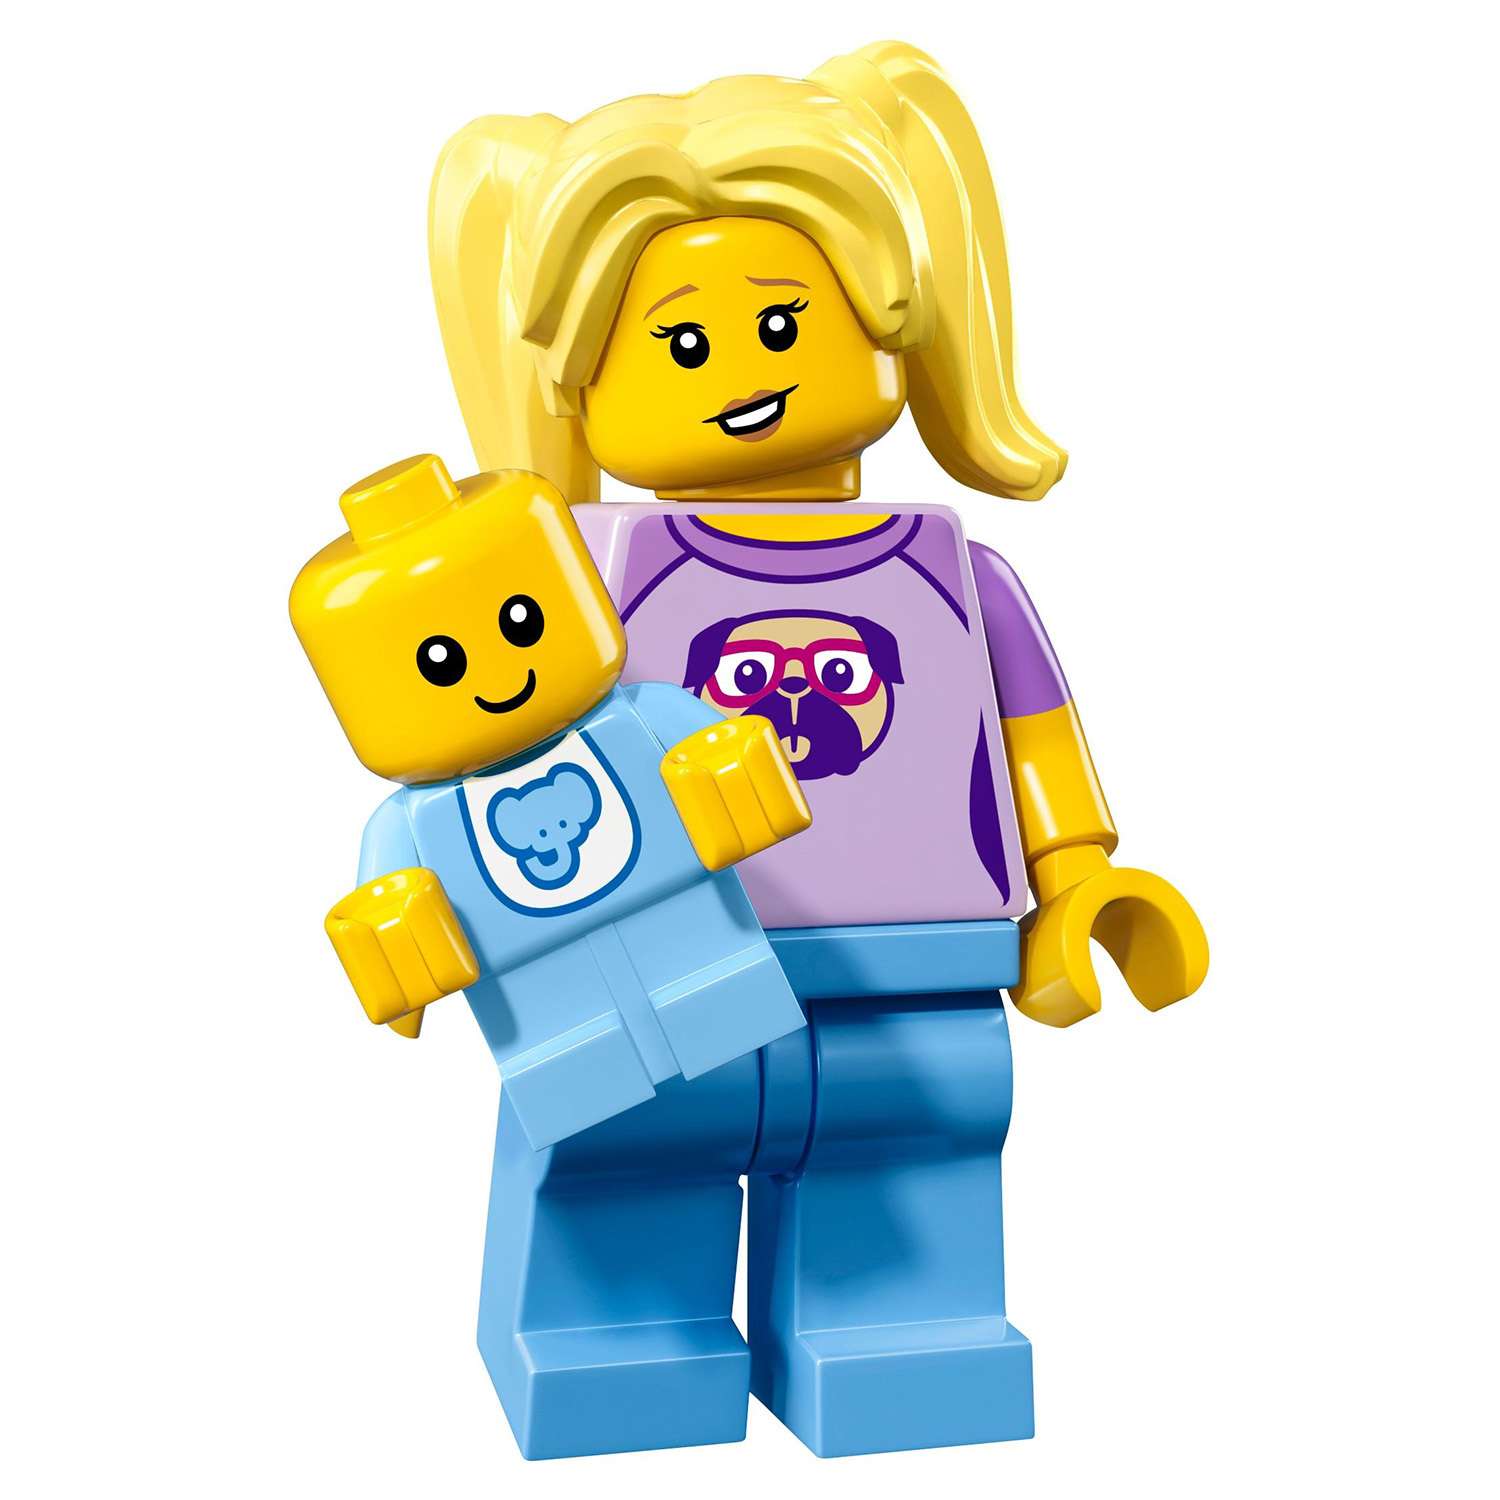 Конструктор LEGO Minifigures Confidential Minifigures Sept. 2016 (71013) - фото 16